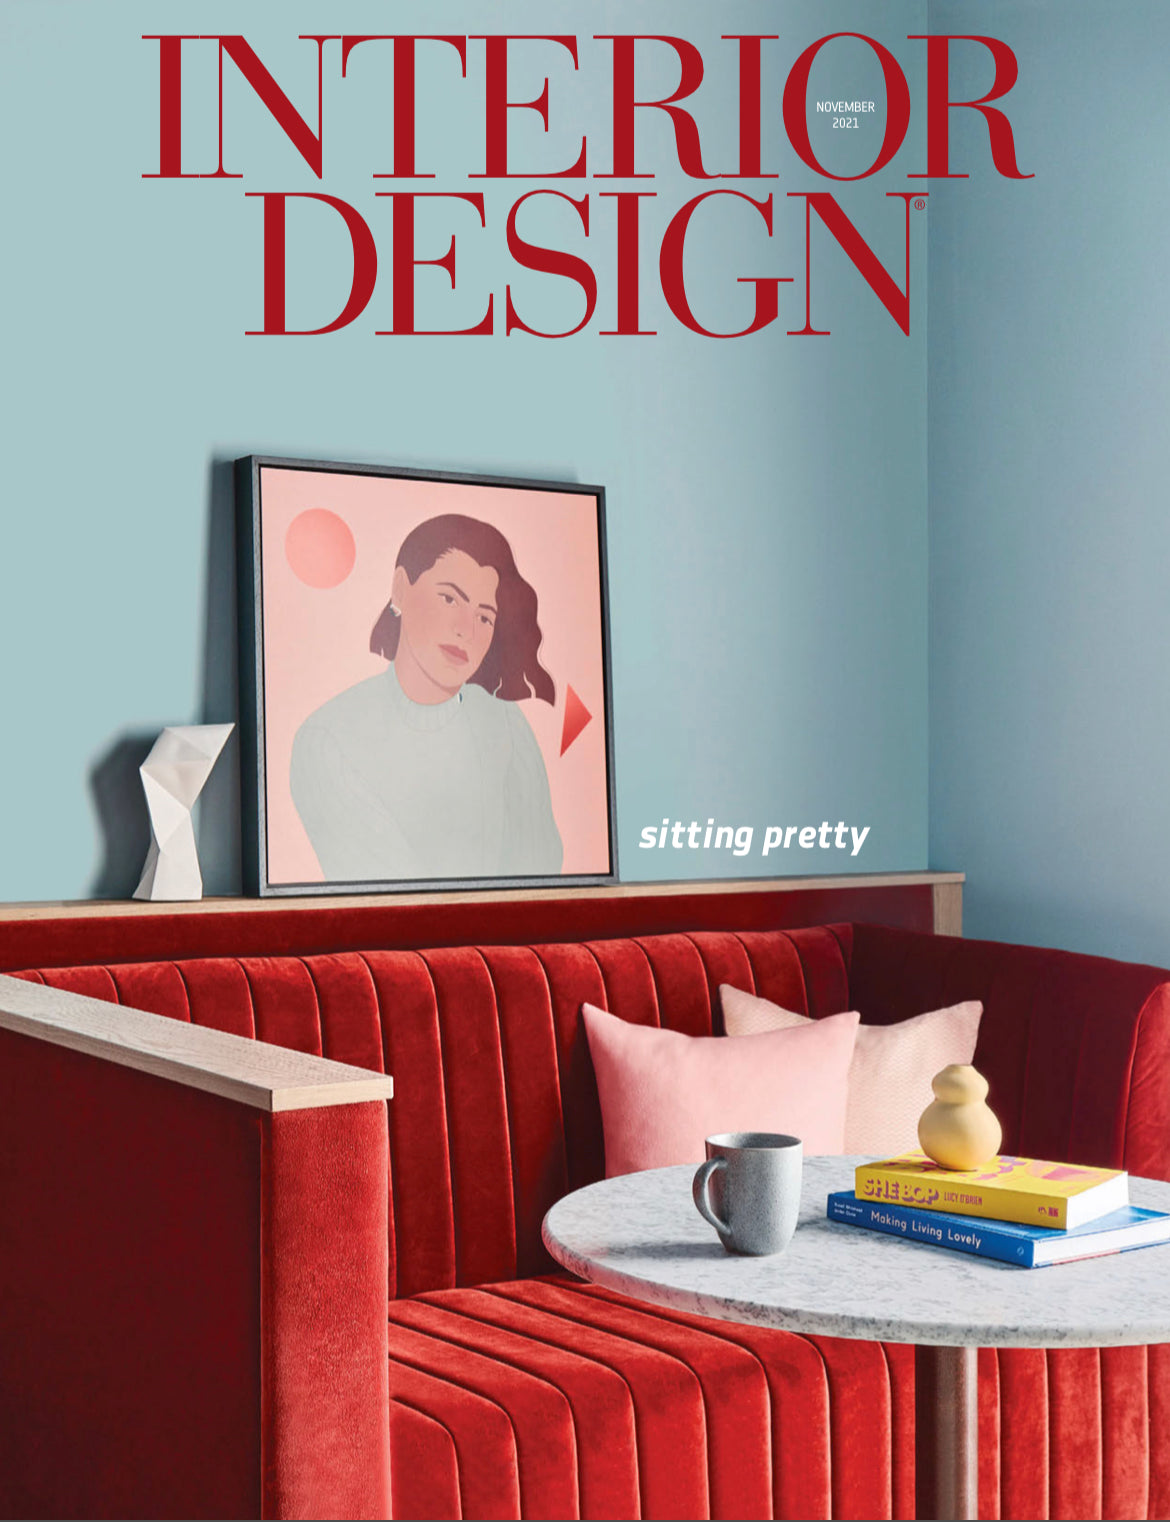 Interior Design - Cover - November 2021